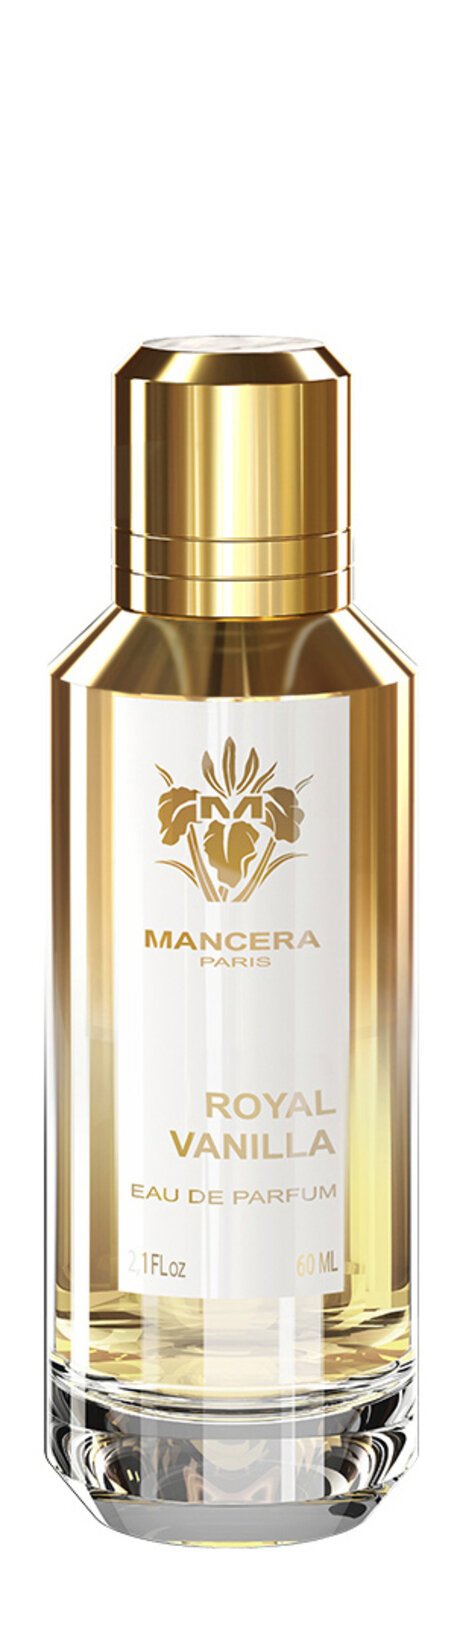 Mancera Royal Vanilla Eau de Parfum